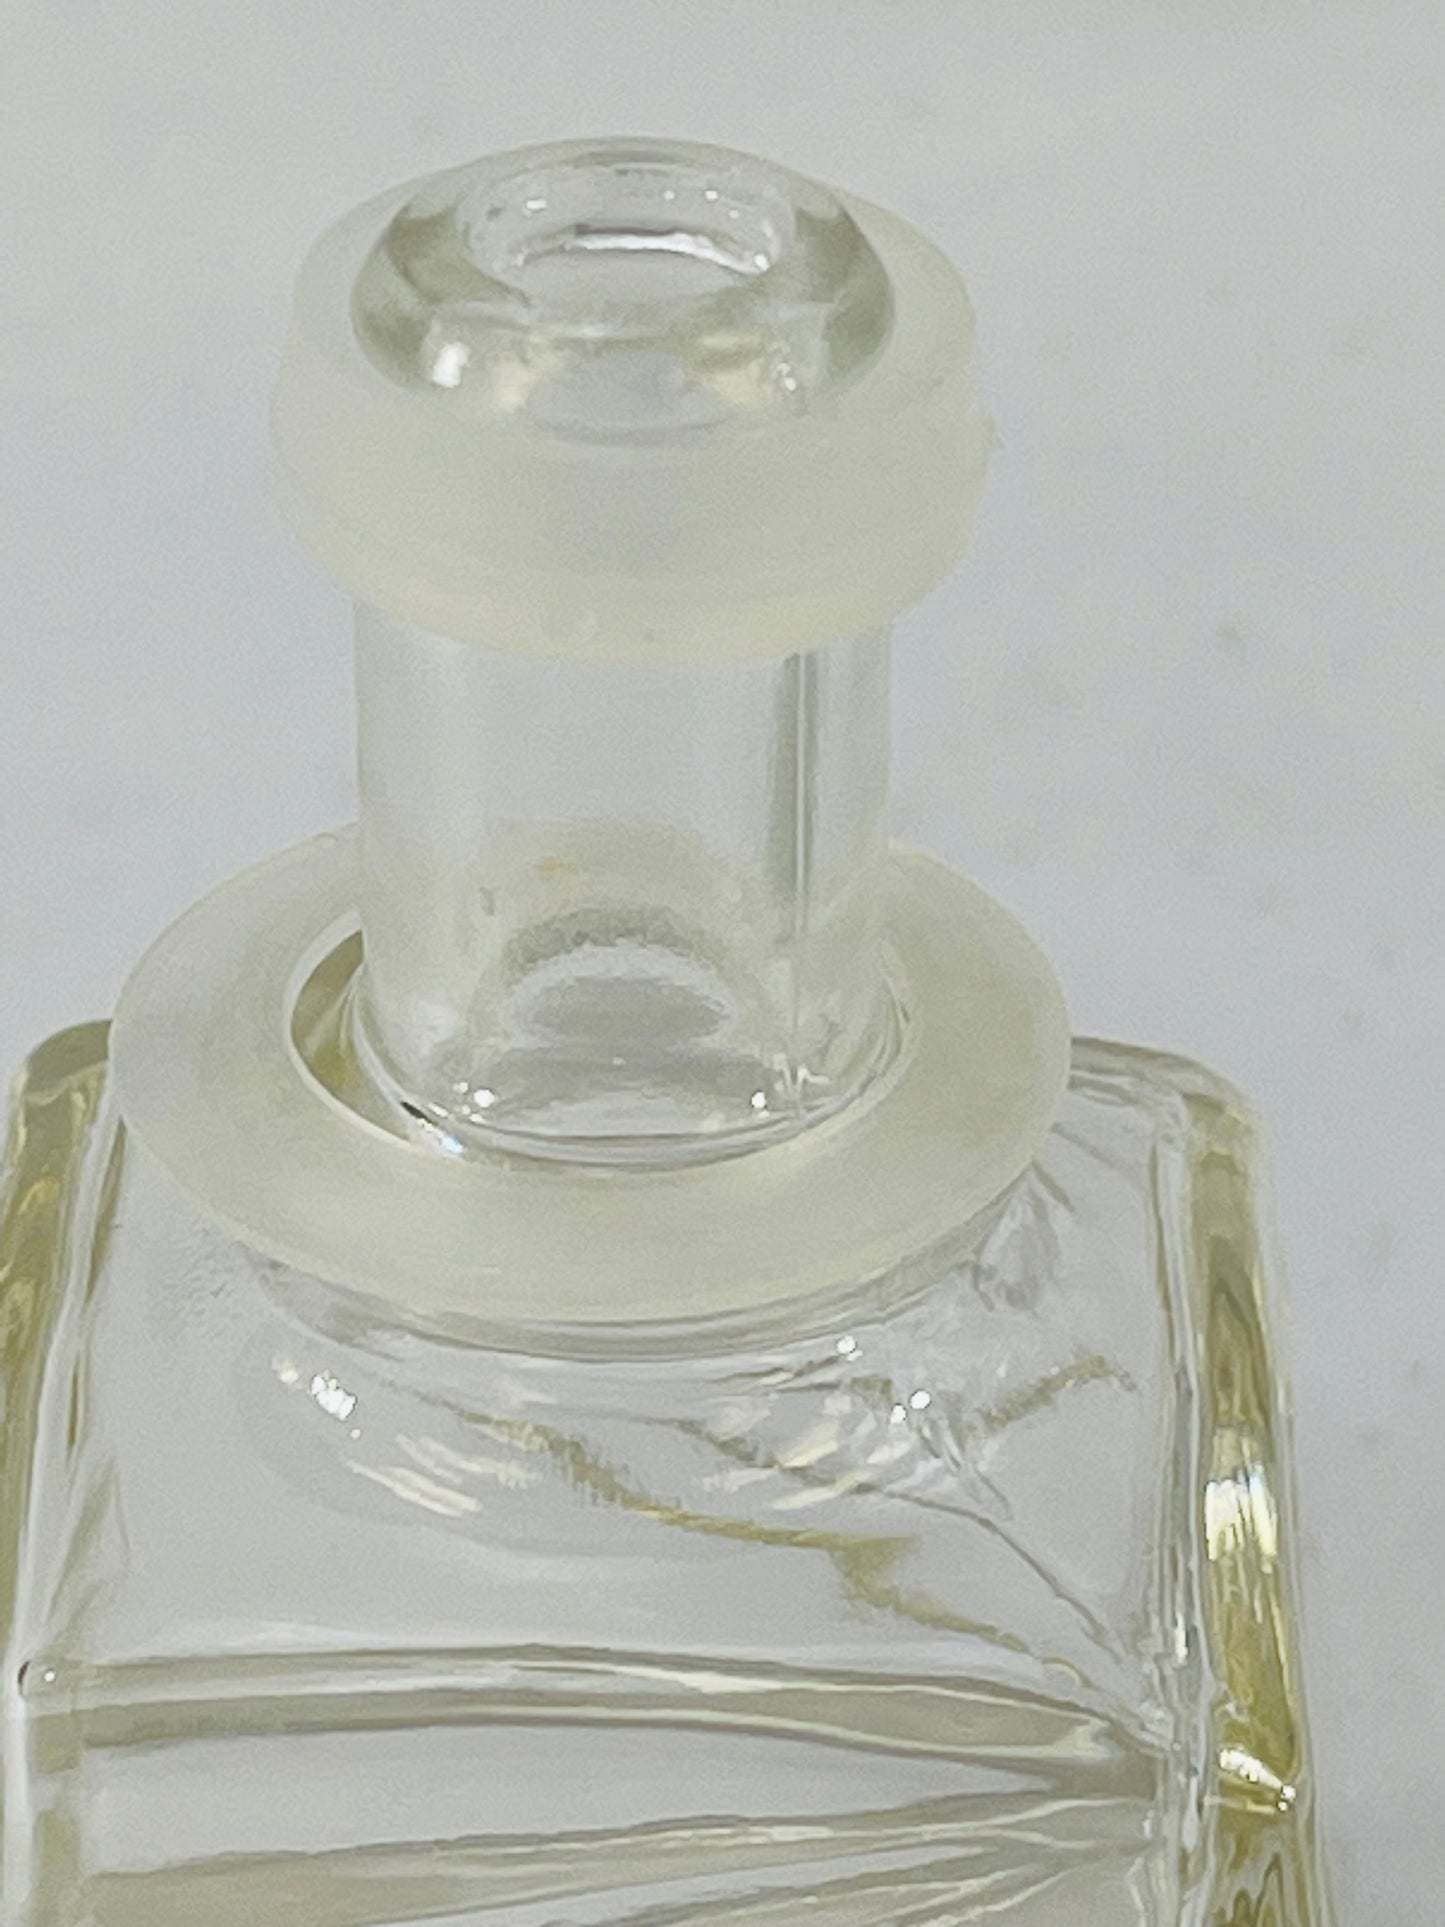 Atomic Pressed Glass Decanter